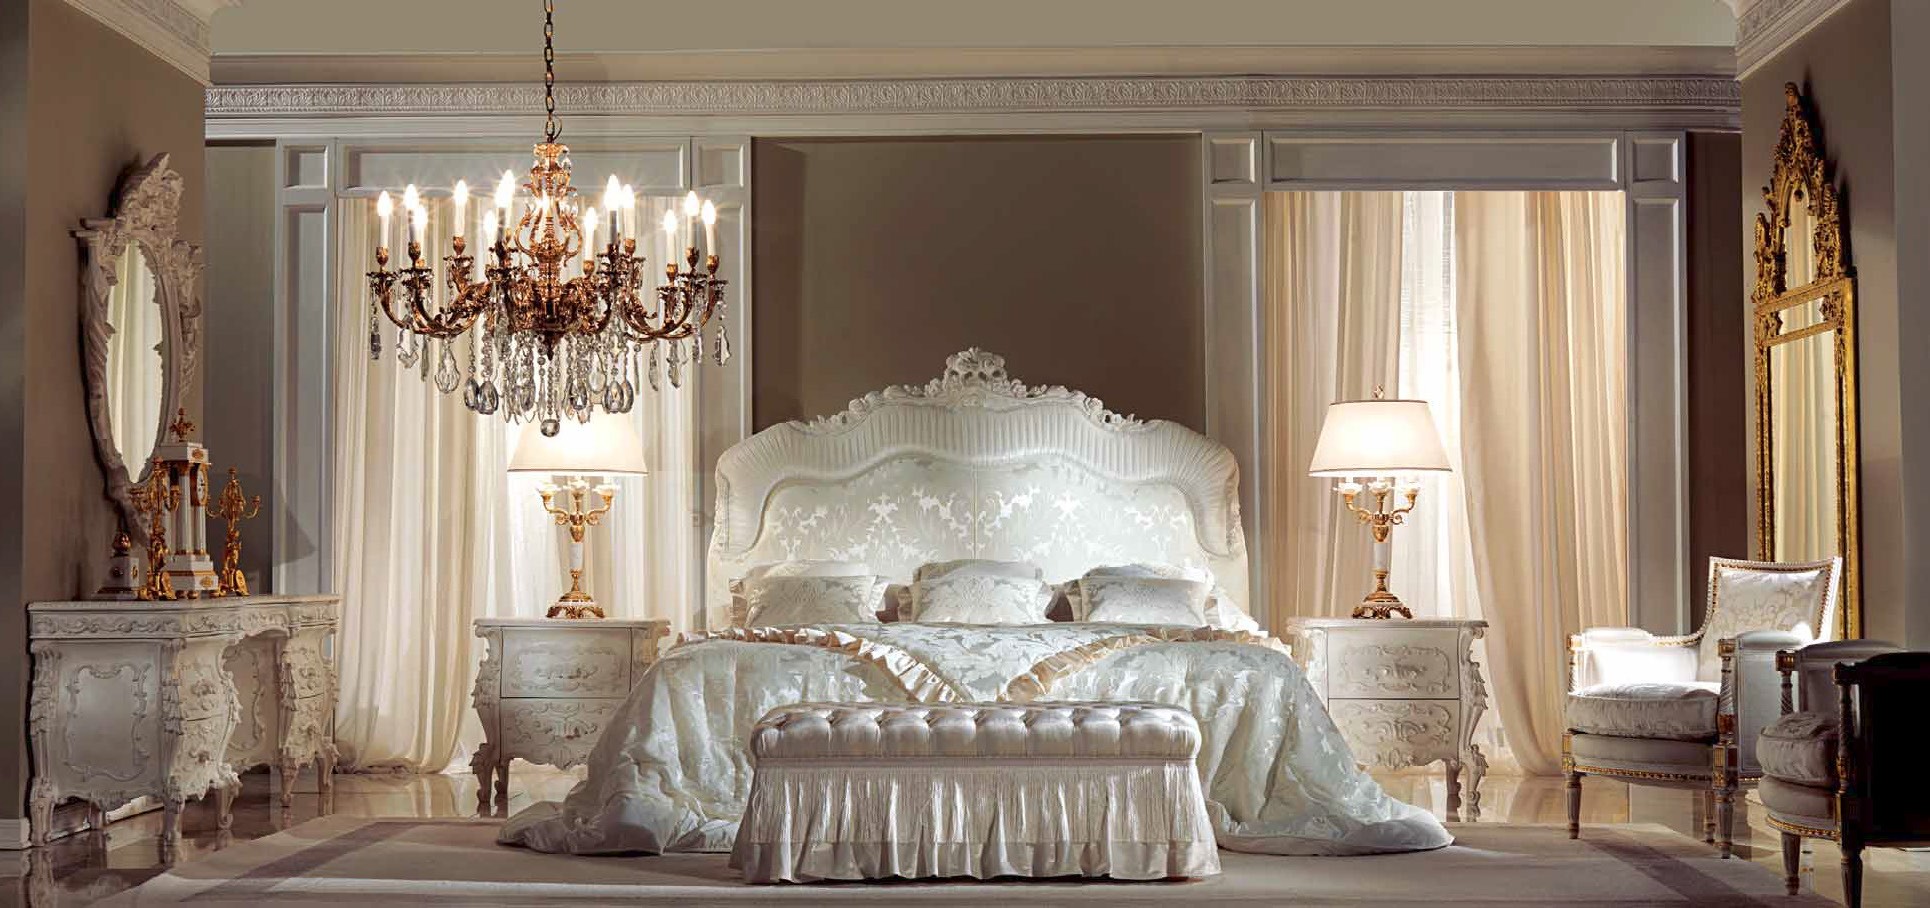 Elegant White Bedroom Furniture Historyofdhaniazin95